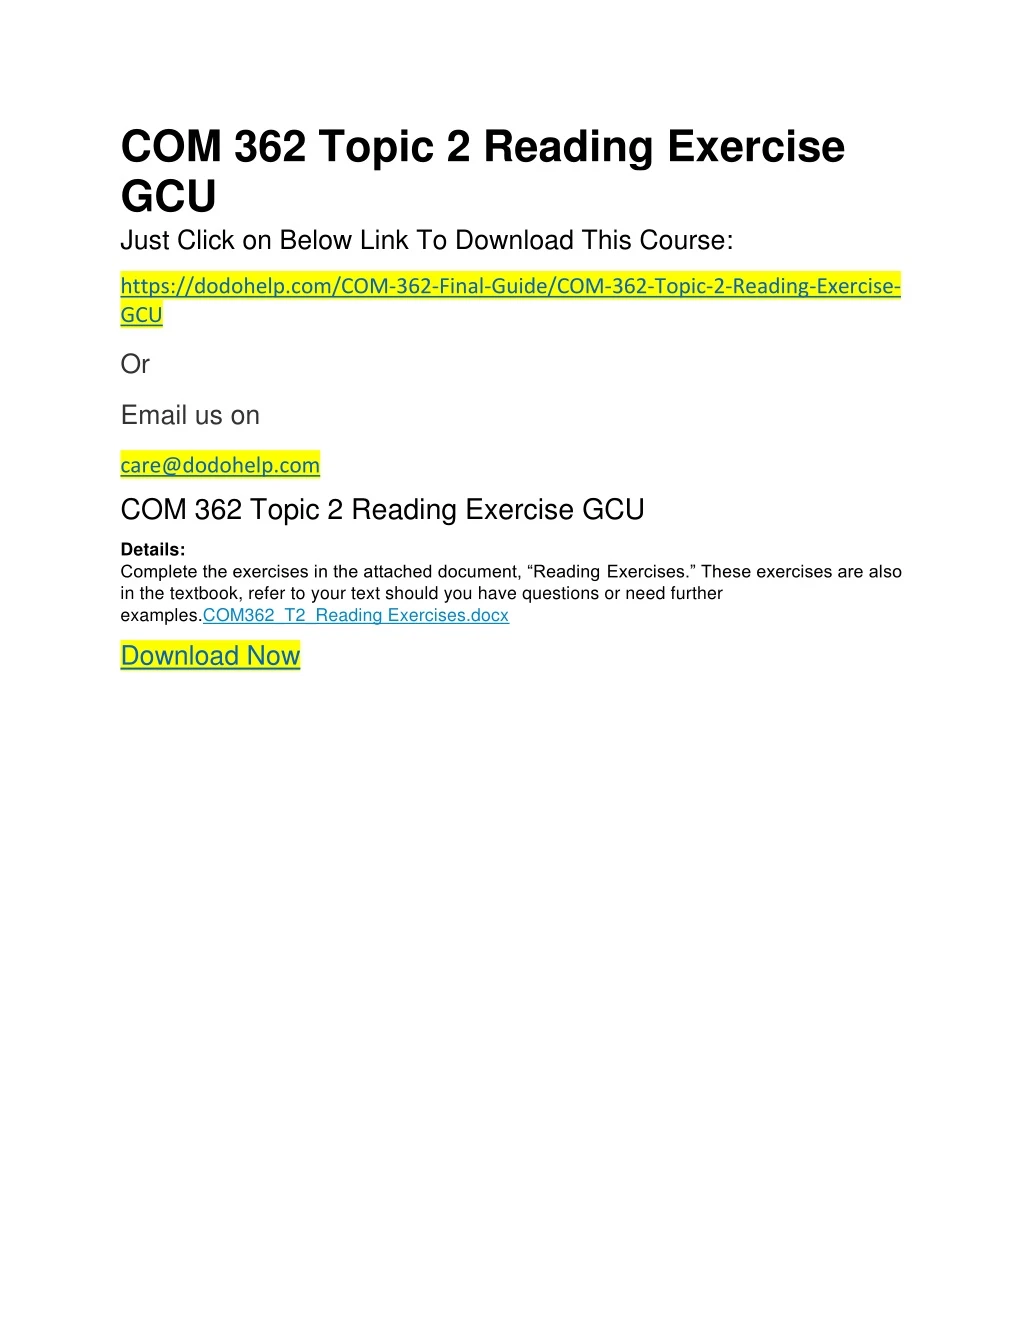 com 362 topic 2 reading exercise gcu just click